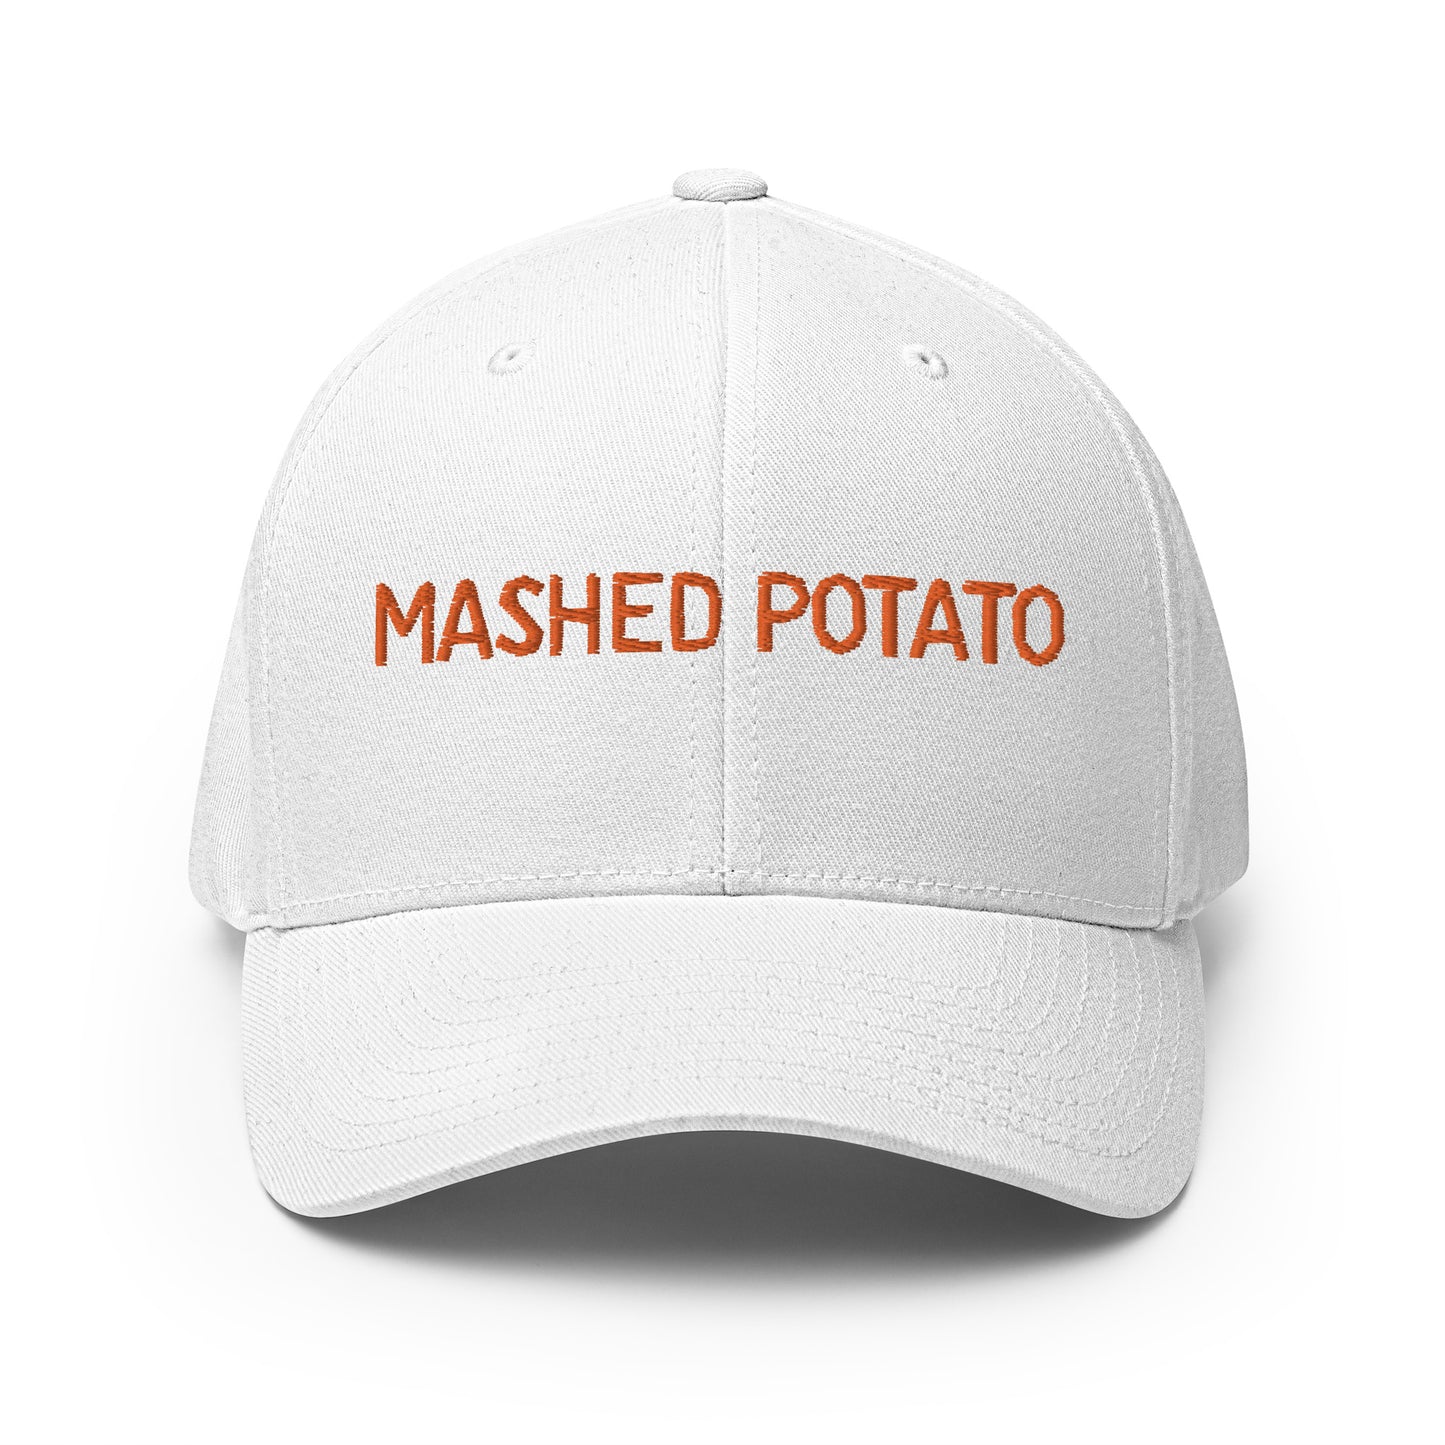 THE "MASHED POTATO" BASEBALL CAP